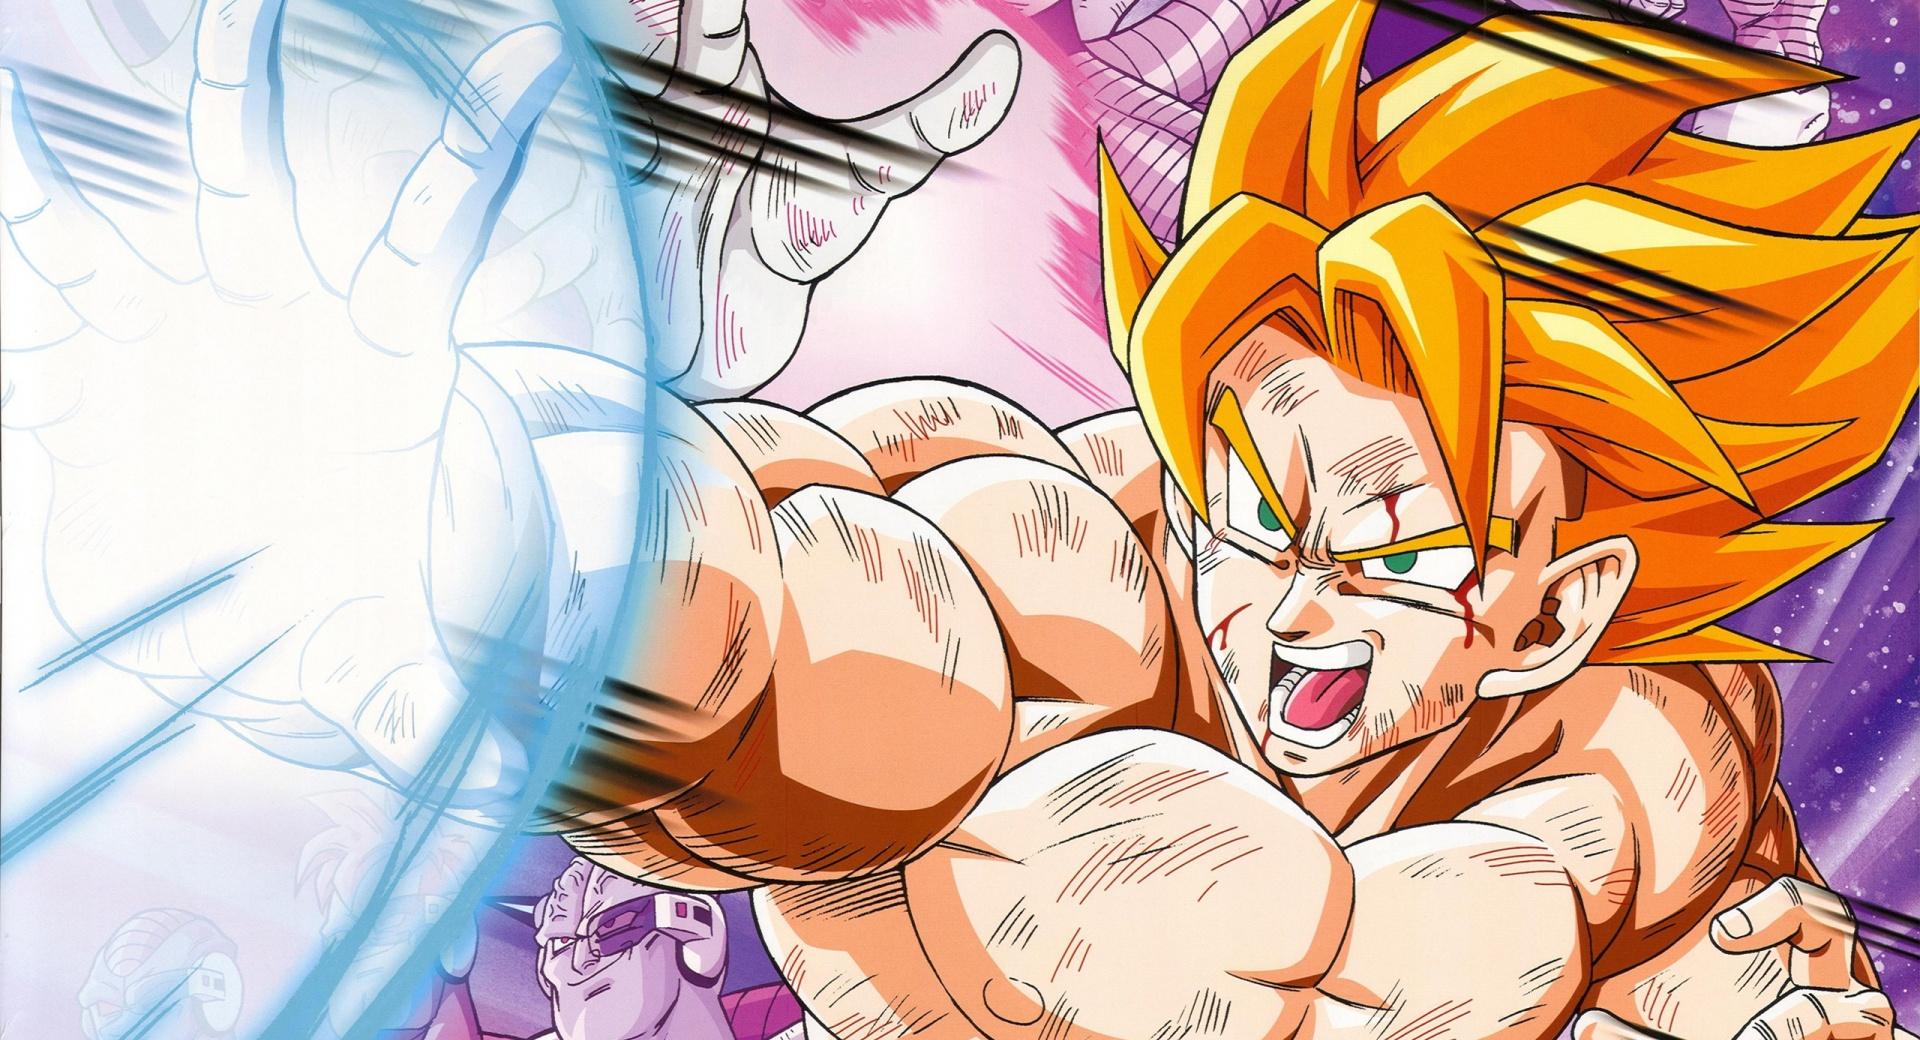 Dragon Ball Z - Super Saiyan Goku at 320 x 480 iPhone size wallpapers HD quality